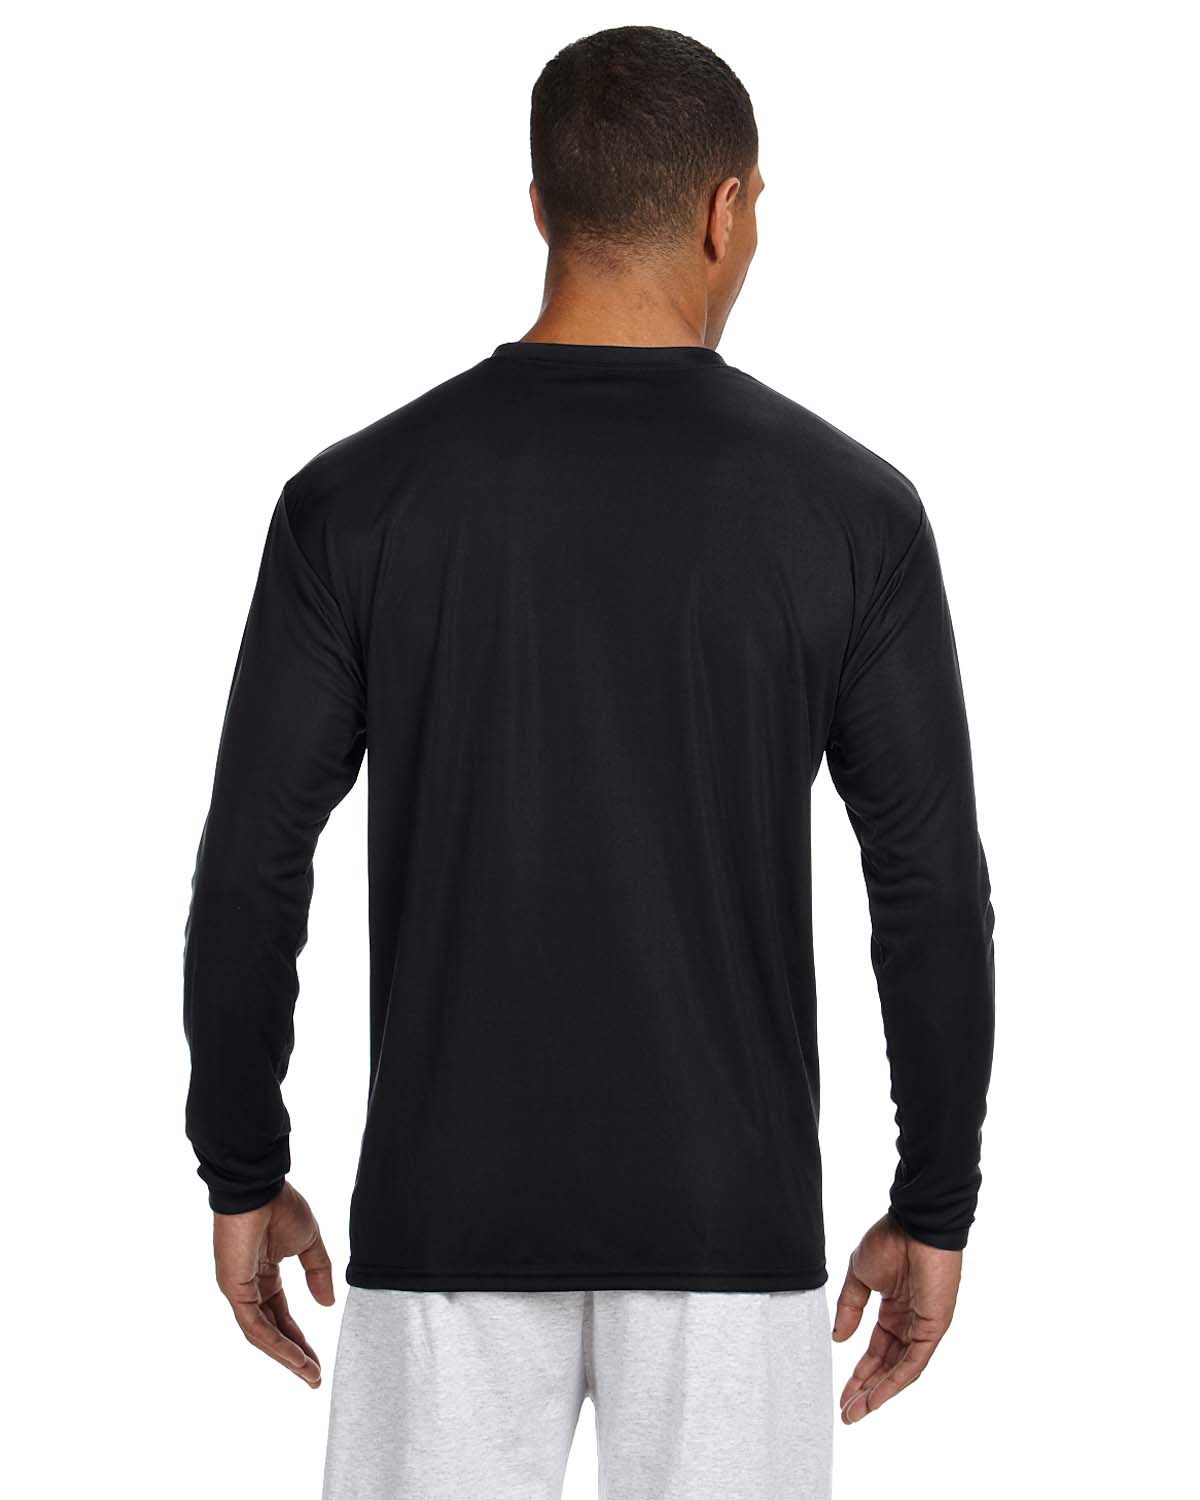 long sleeve black dri fit shirt